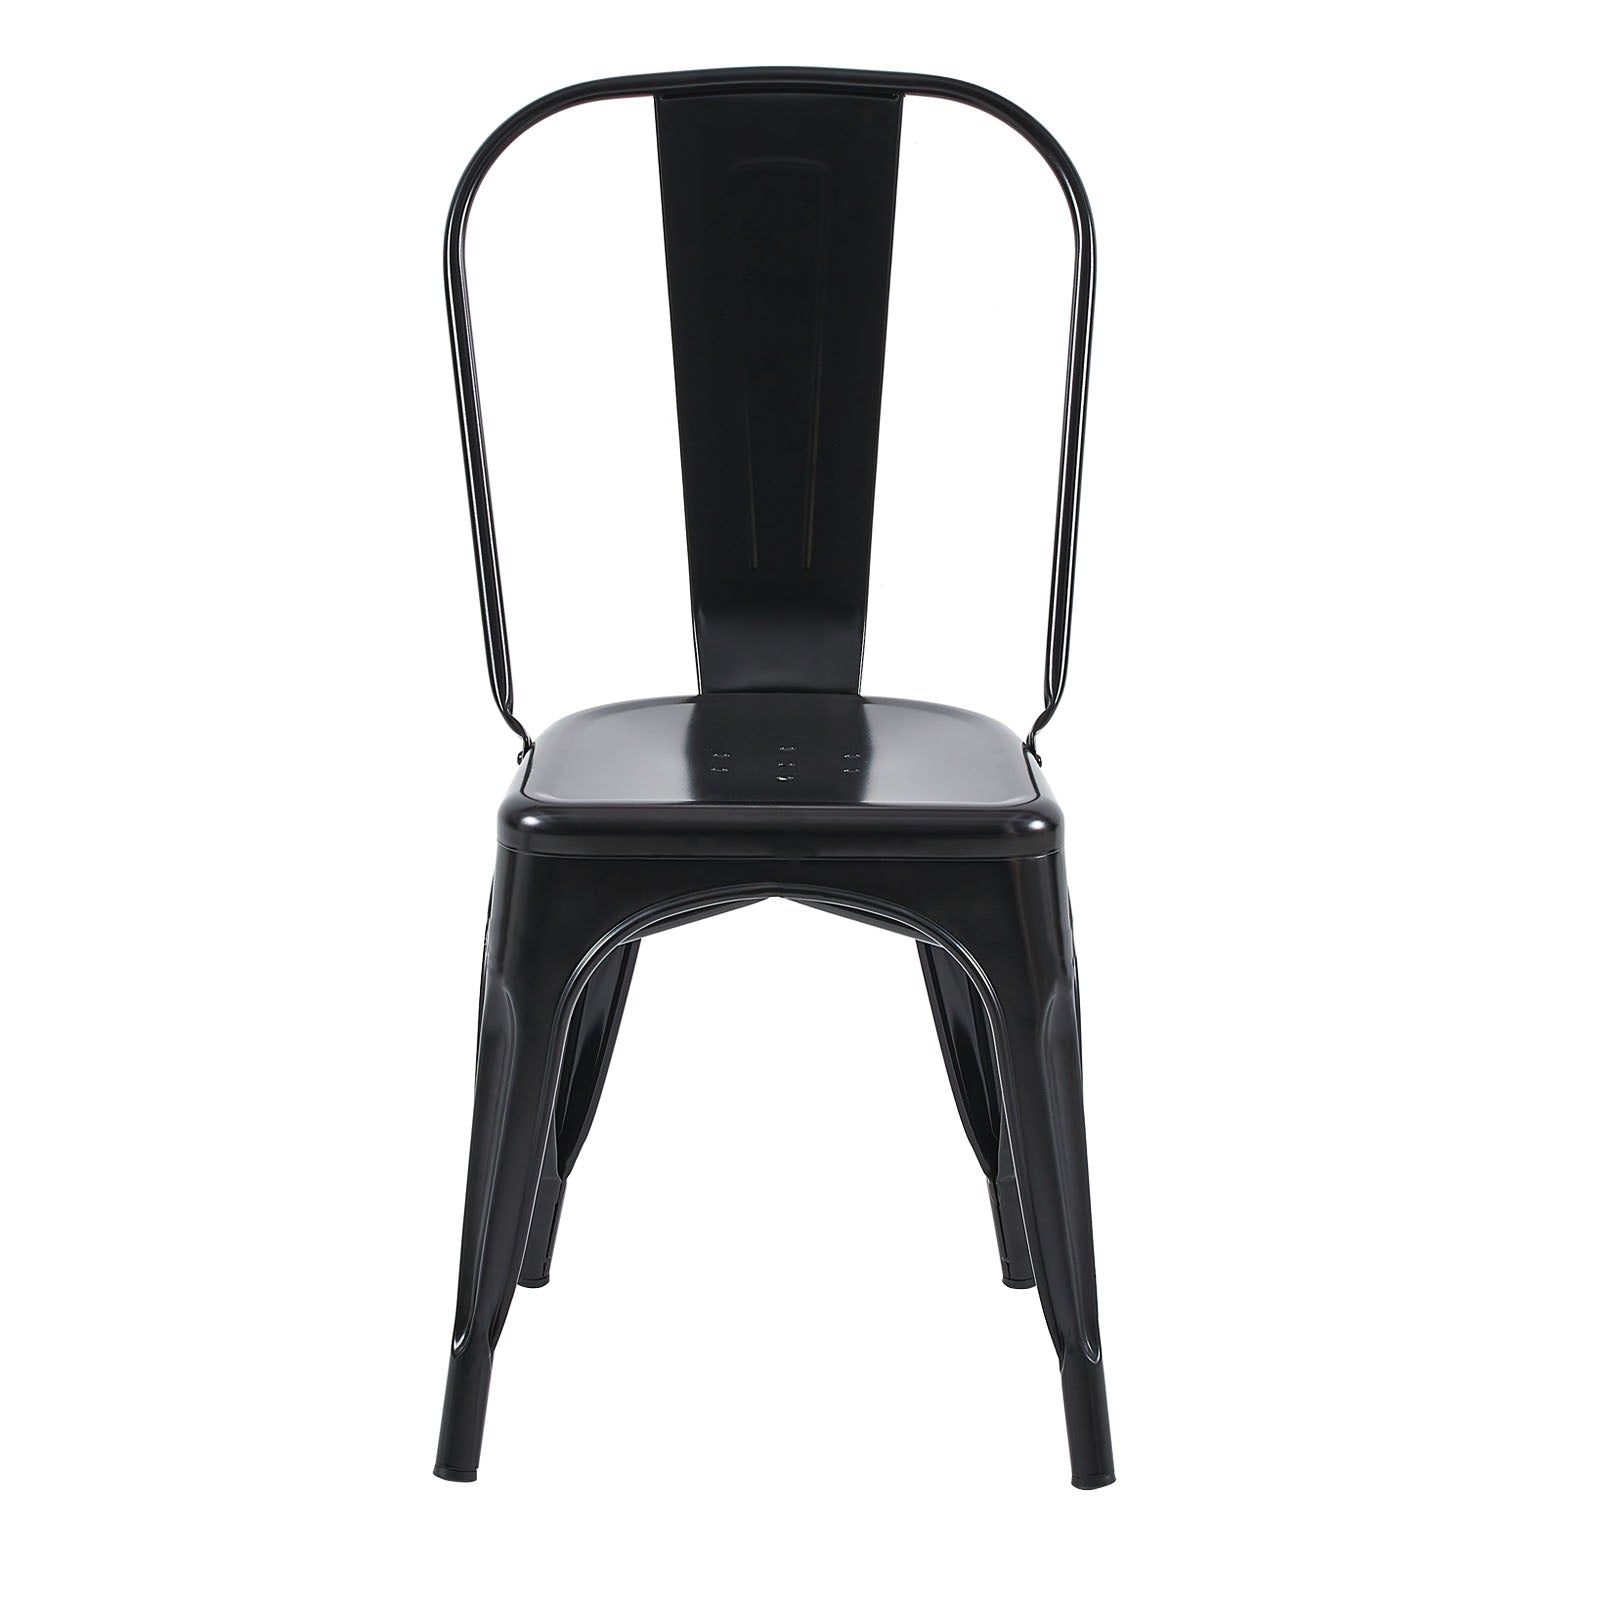 MOOLI Bar Stool Sheet Metal Chairs with Steel Legs - Black